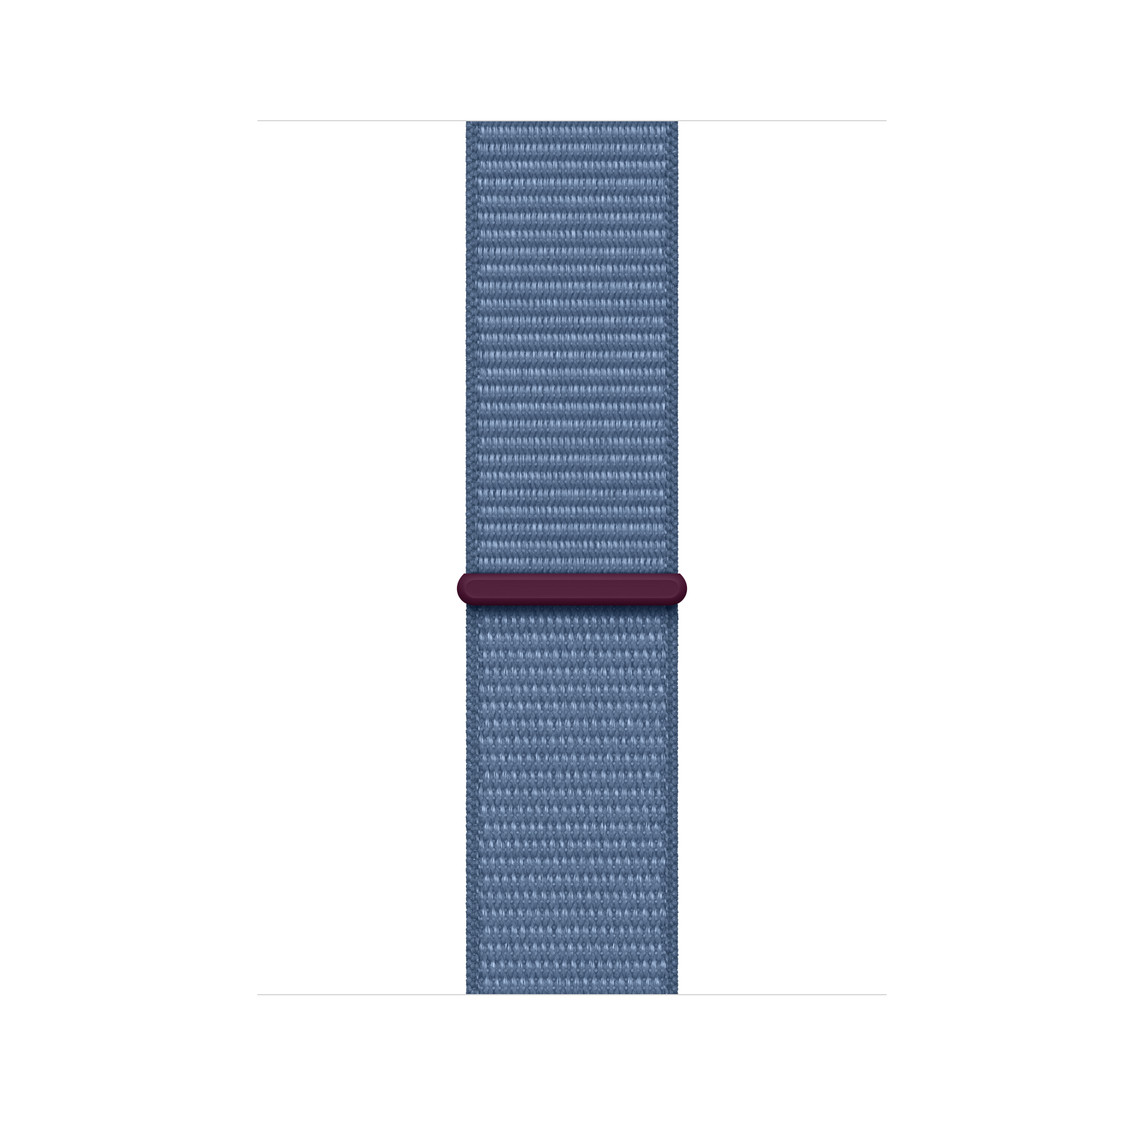 Bracelet sport à rabat bleu hivernal, nylon tissé bleu pâle et fermeture à rabat.